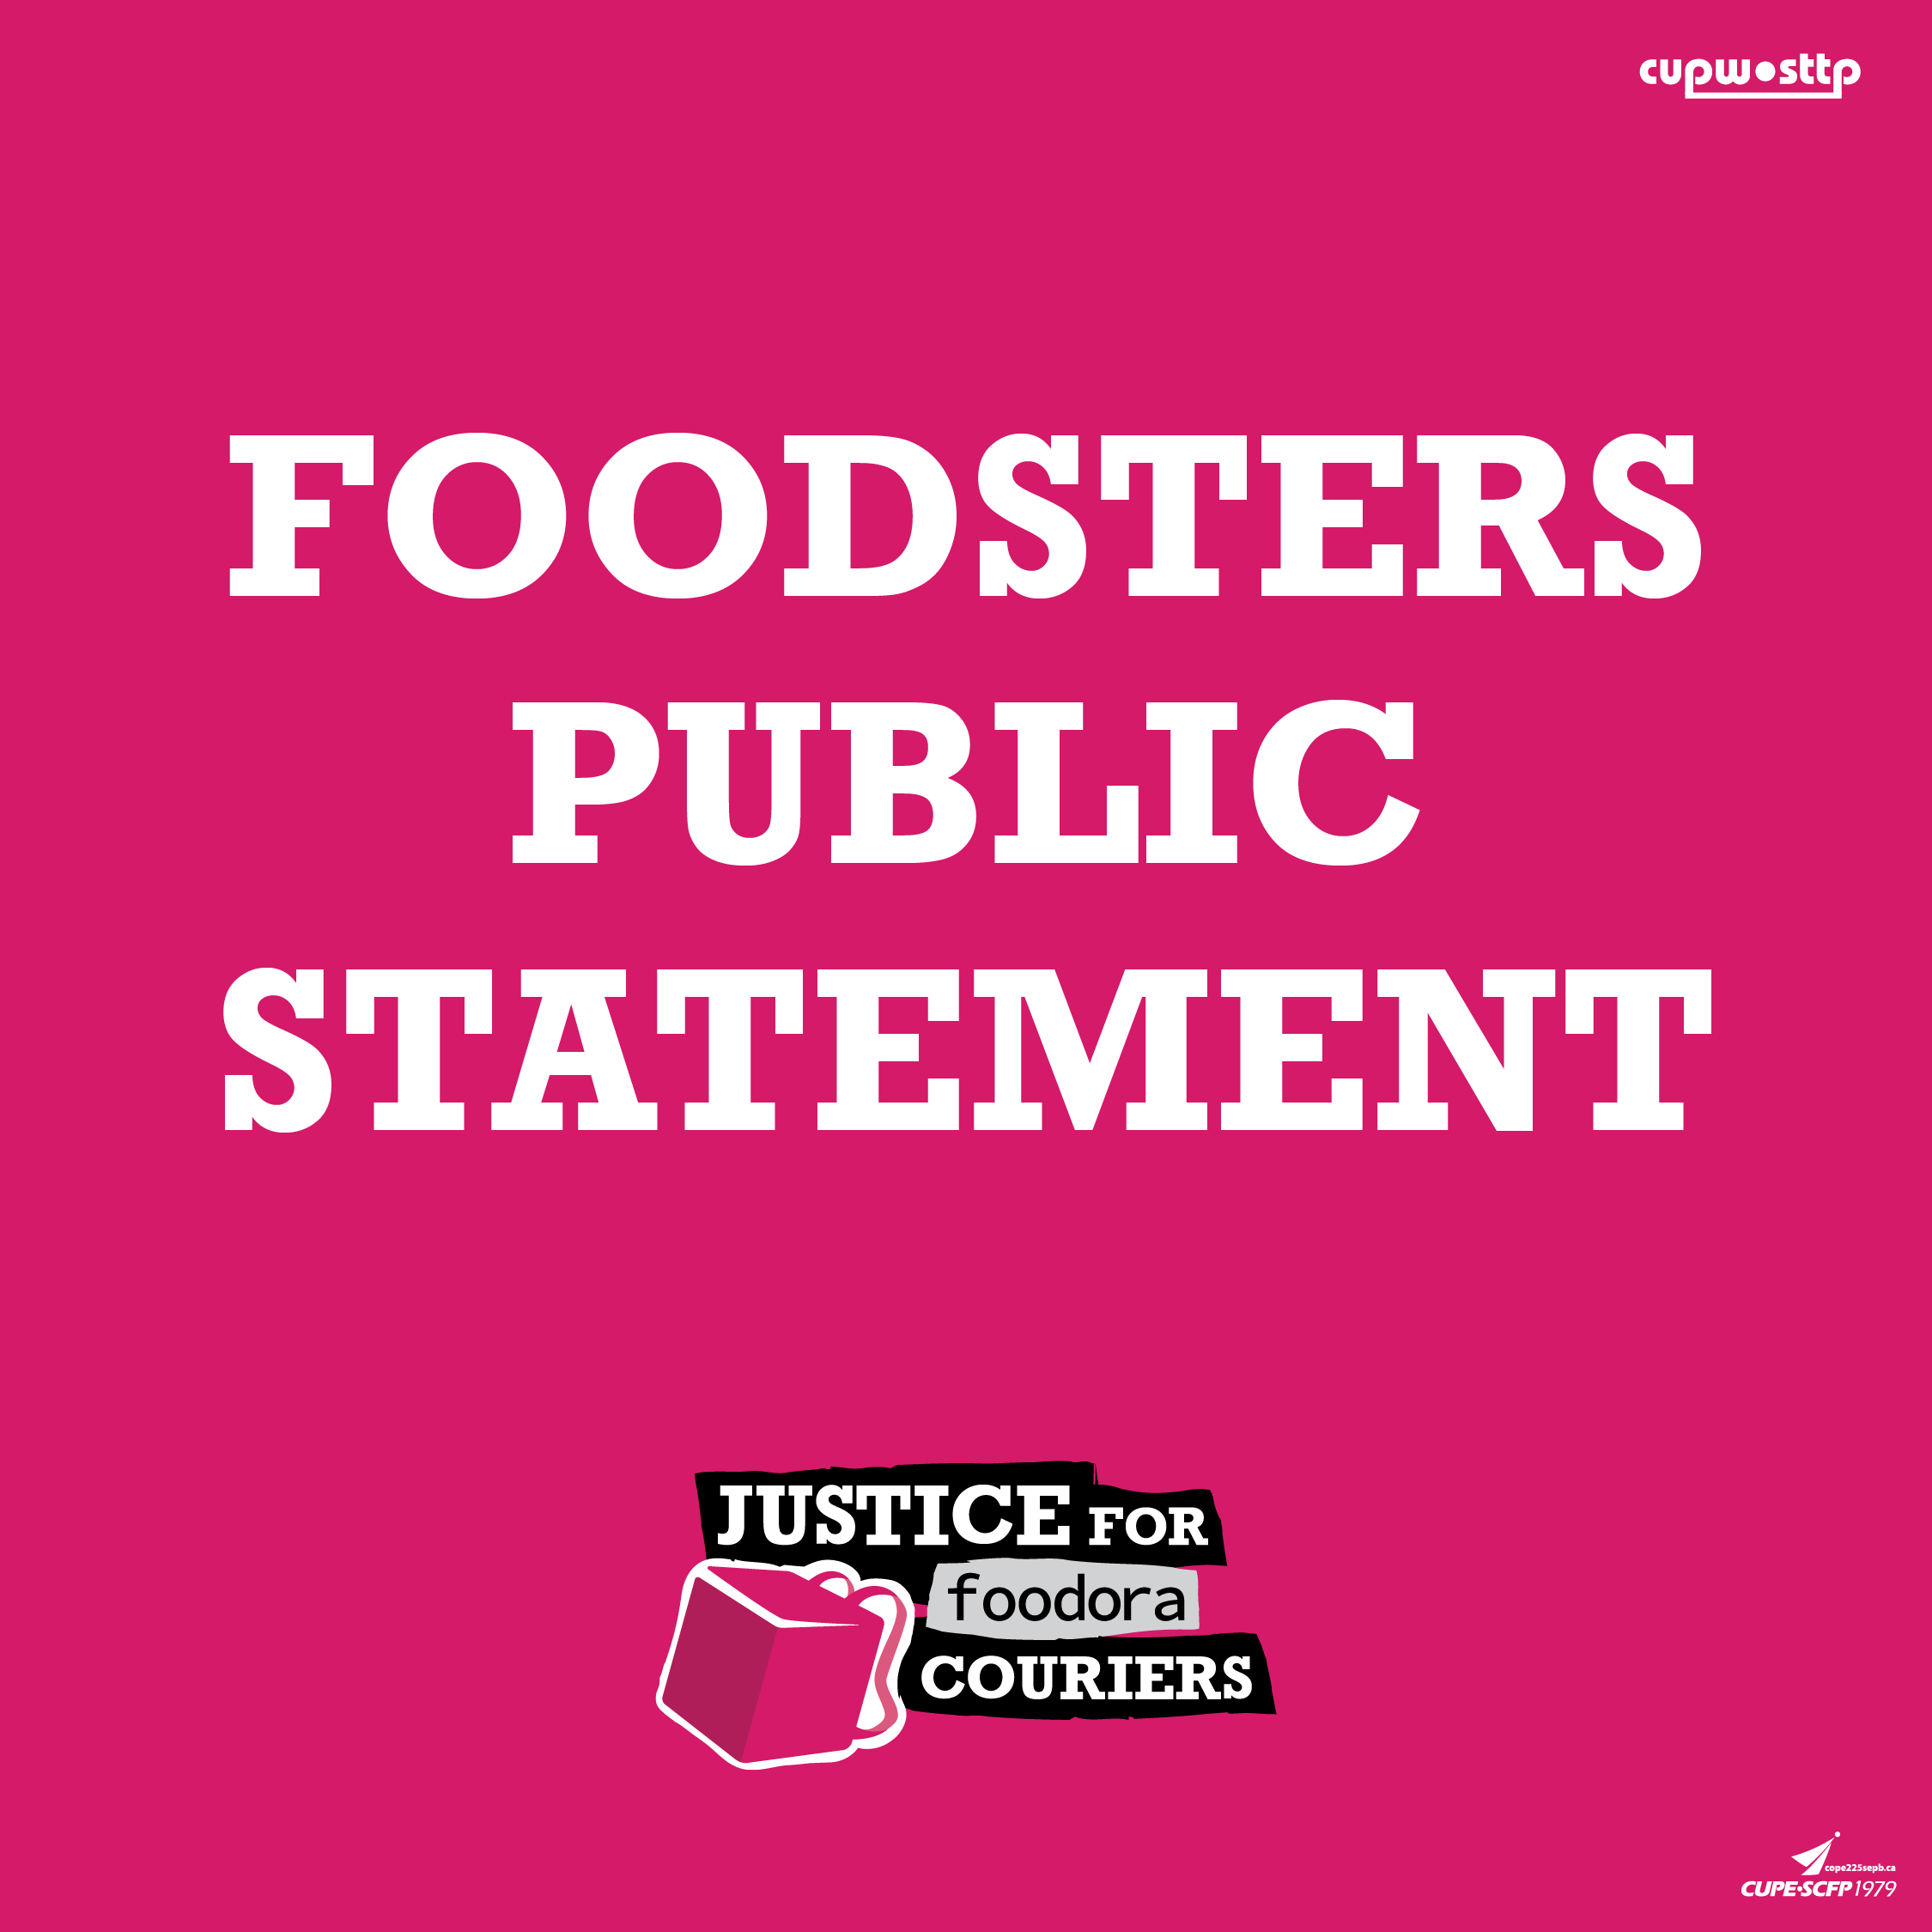 Image: Foodsters Public Statement